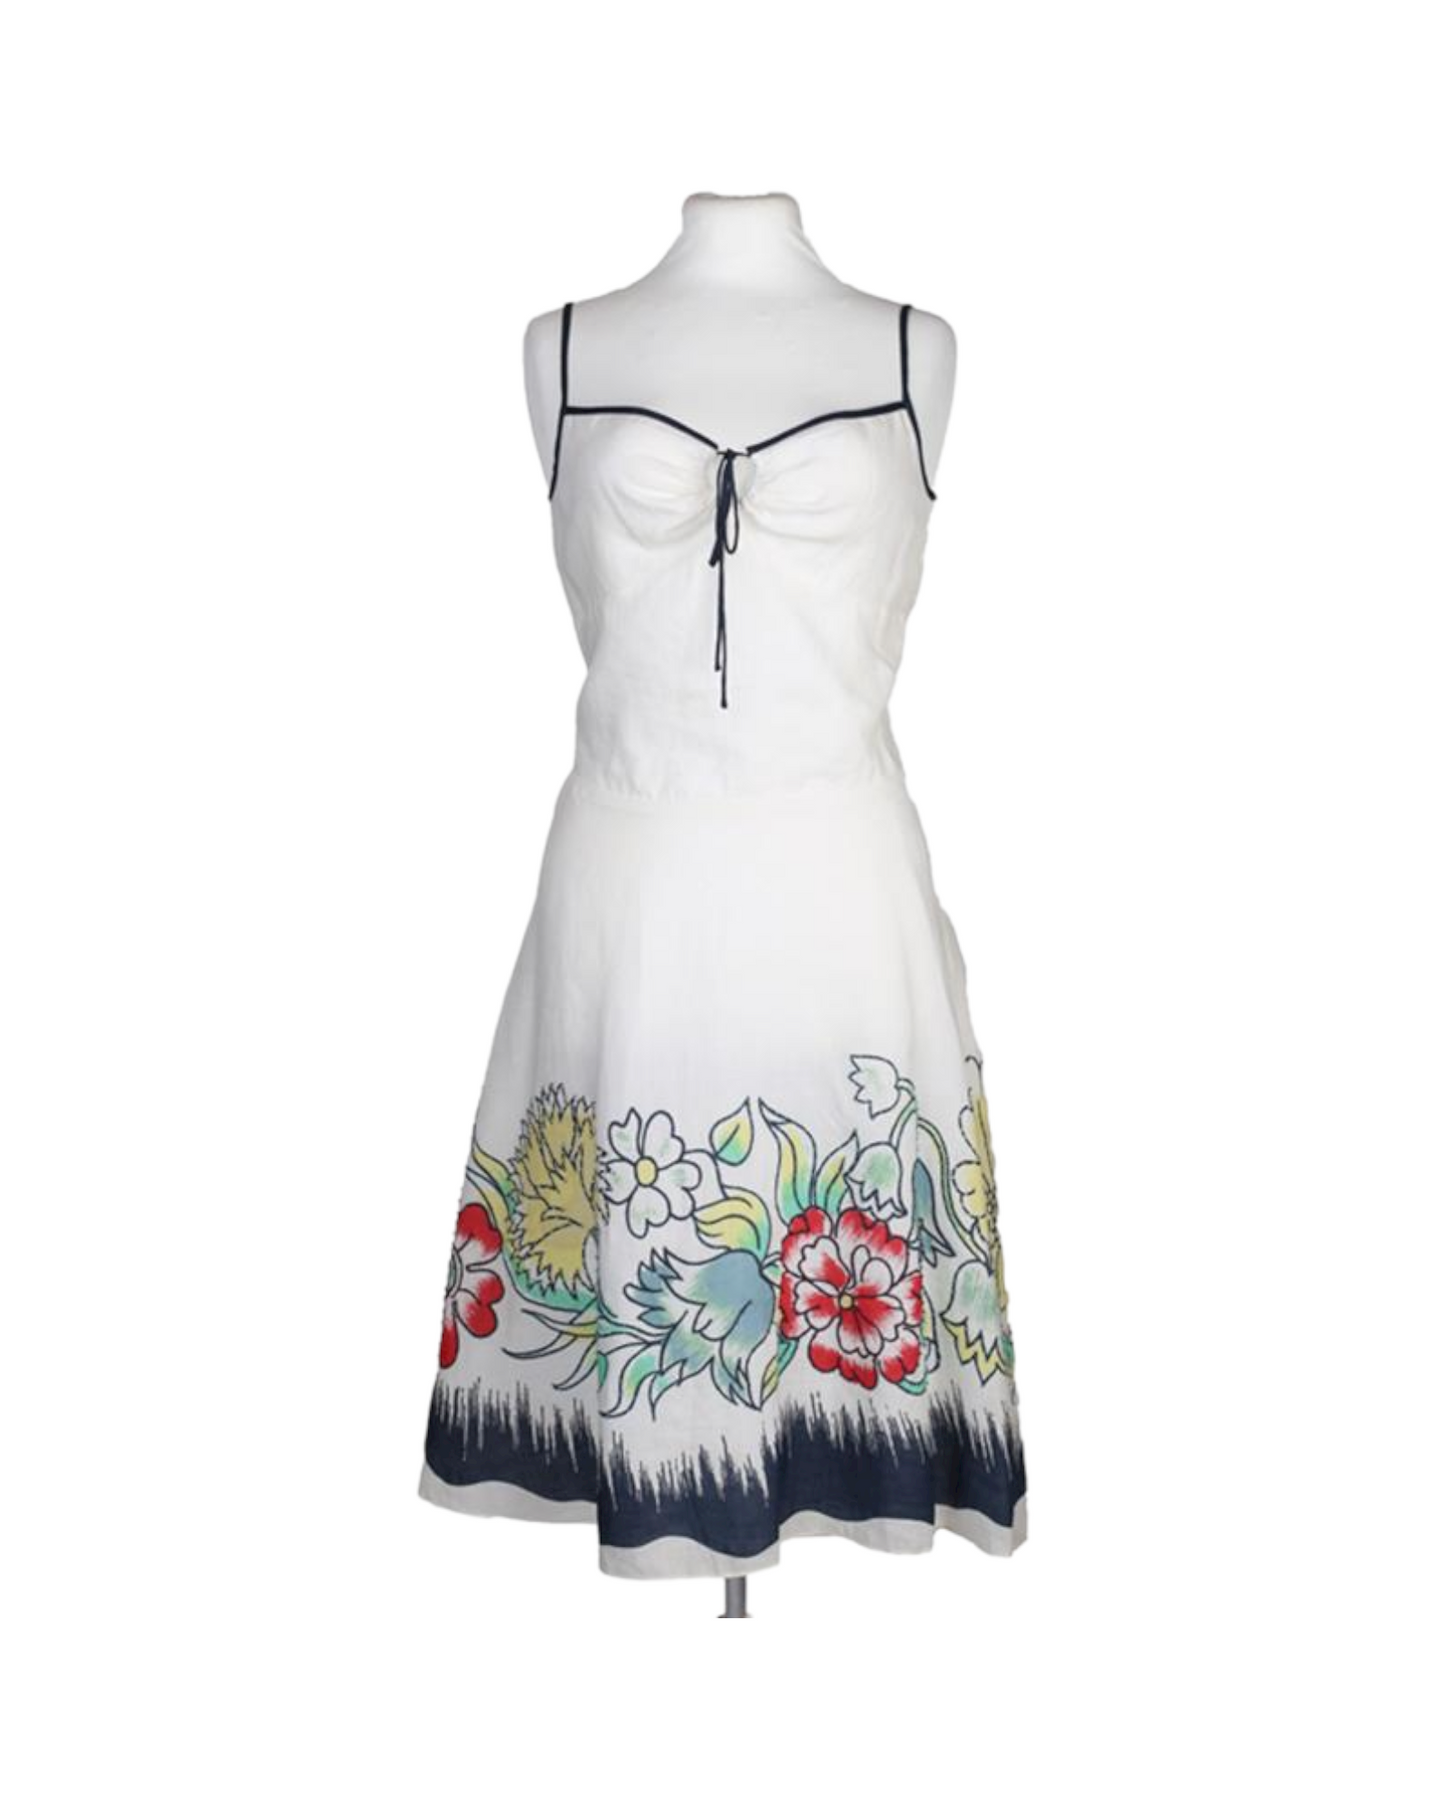 DKNY White Printed Summer Dress